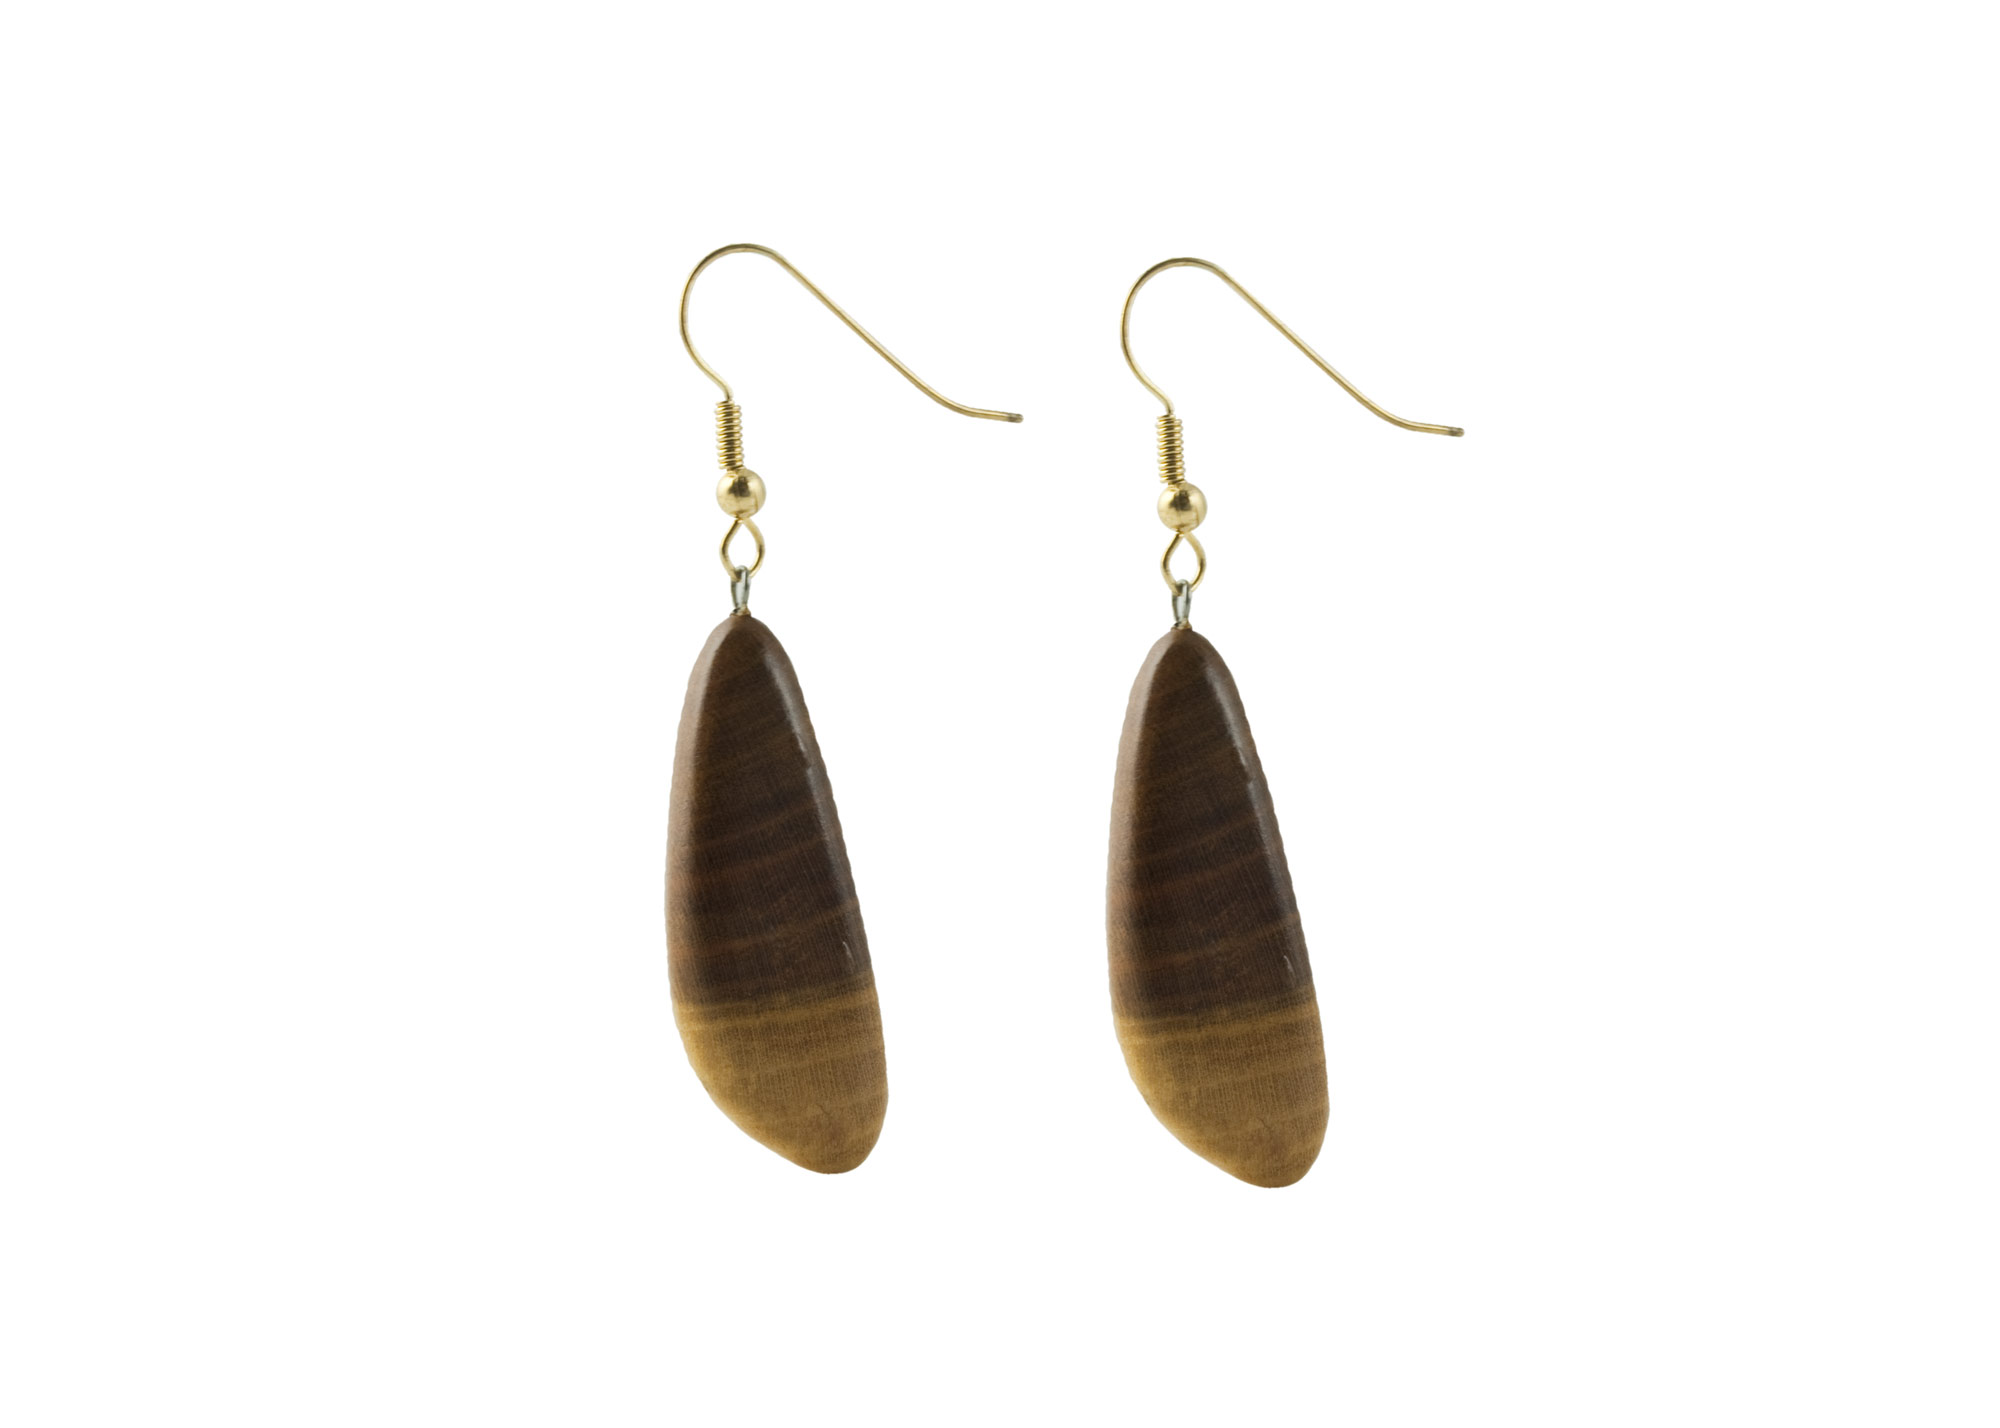 Buy Black Sea Wooden Earrings Asymmetrical Two-Tone Approx  at GoldenCockerel.com